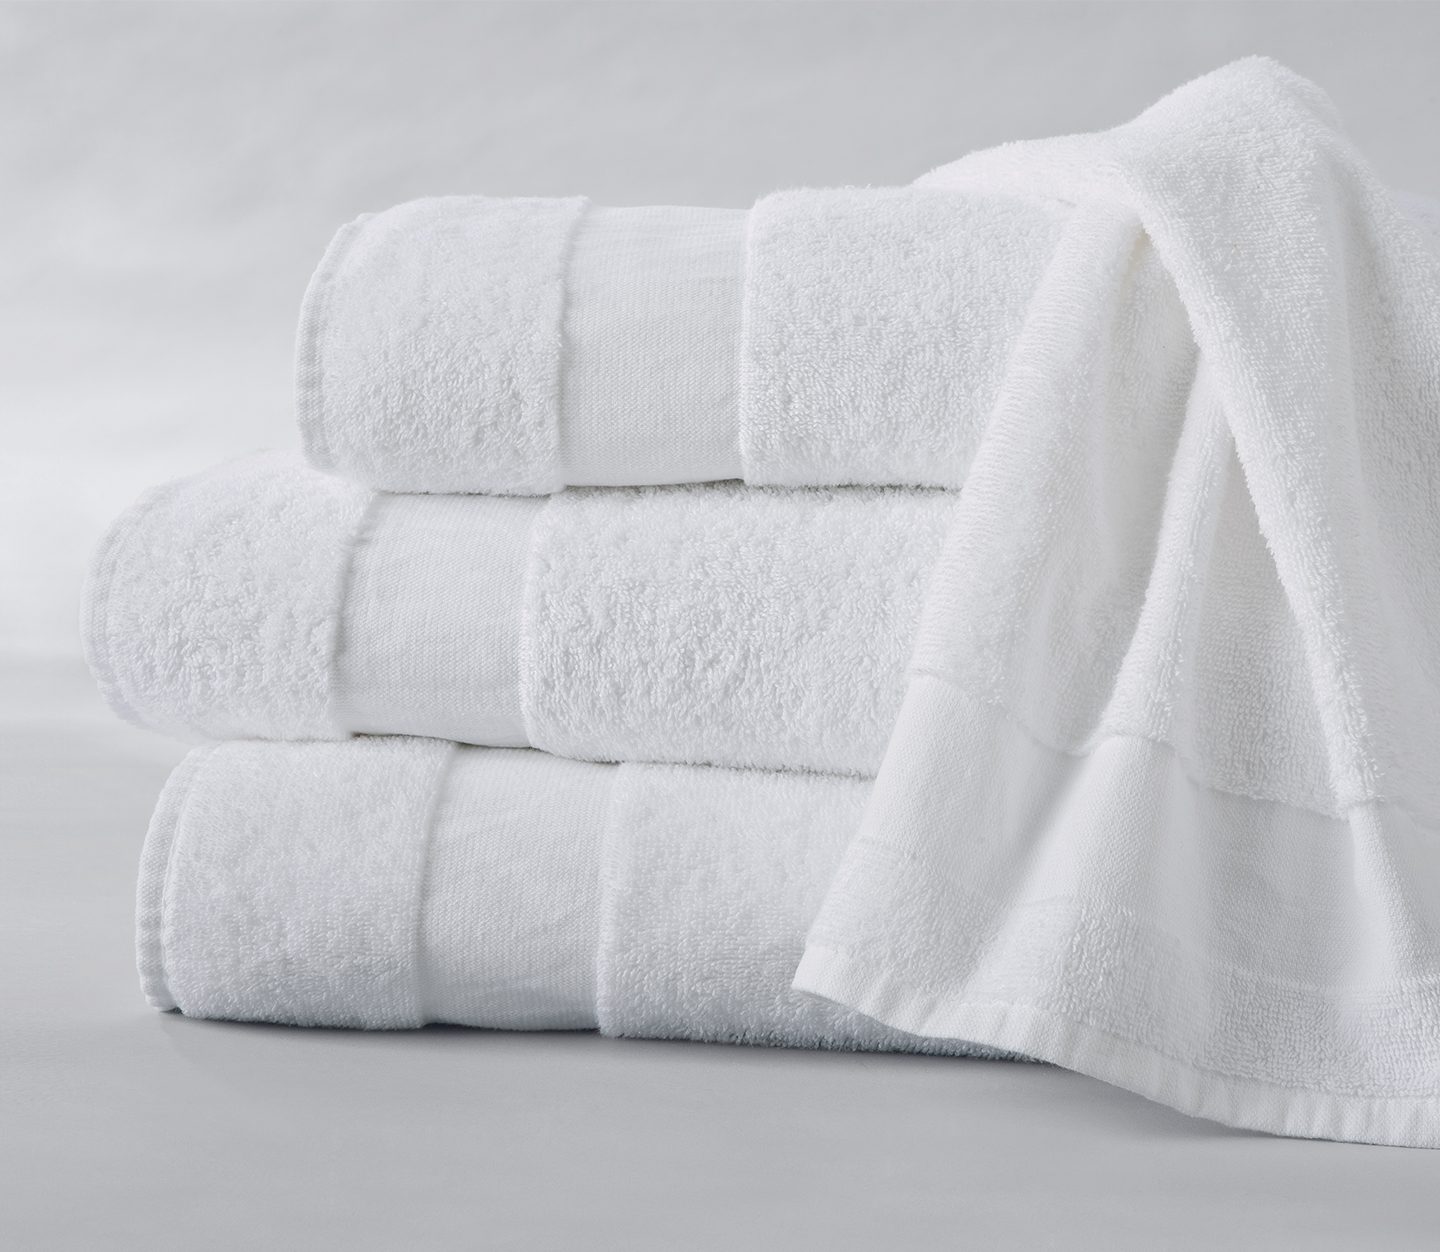 Bath Towels - More Soft, More Absorbent, More Value